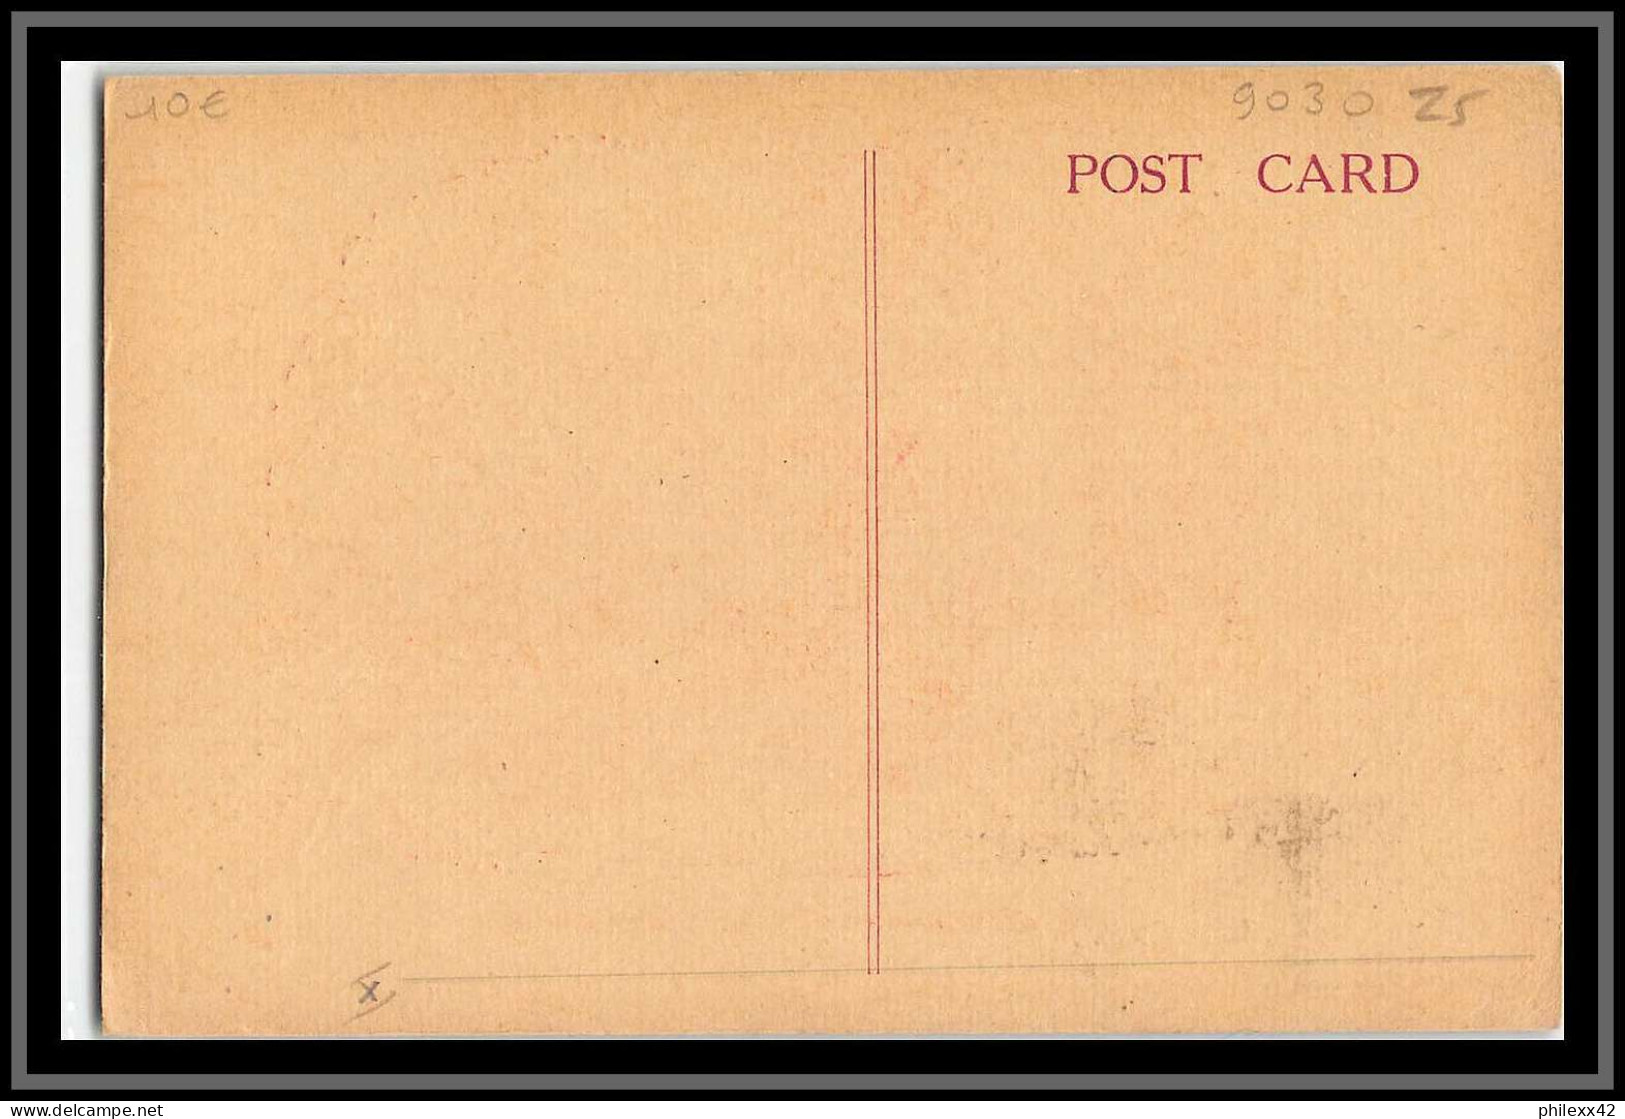 49177 N°49 Fourmilier Ant Bear Anteater Cad 1938 Faune Guyane Francaise Carte Maximum (card) - Storia Postale